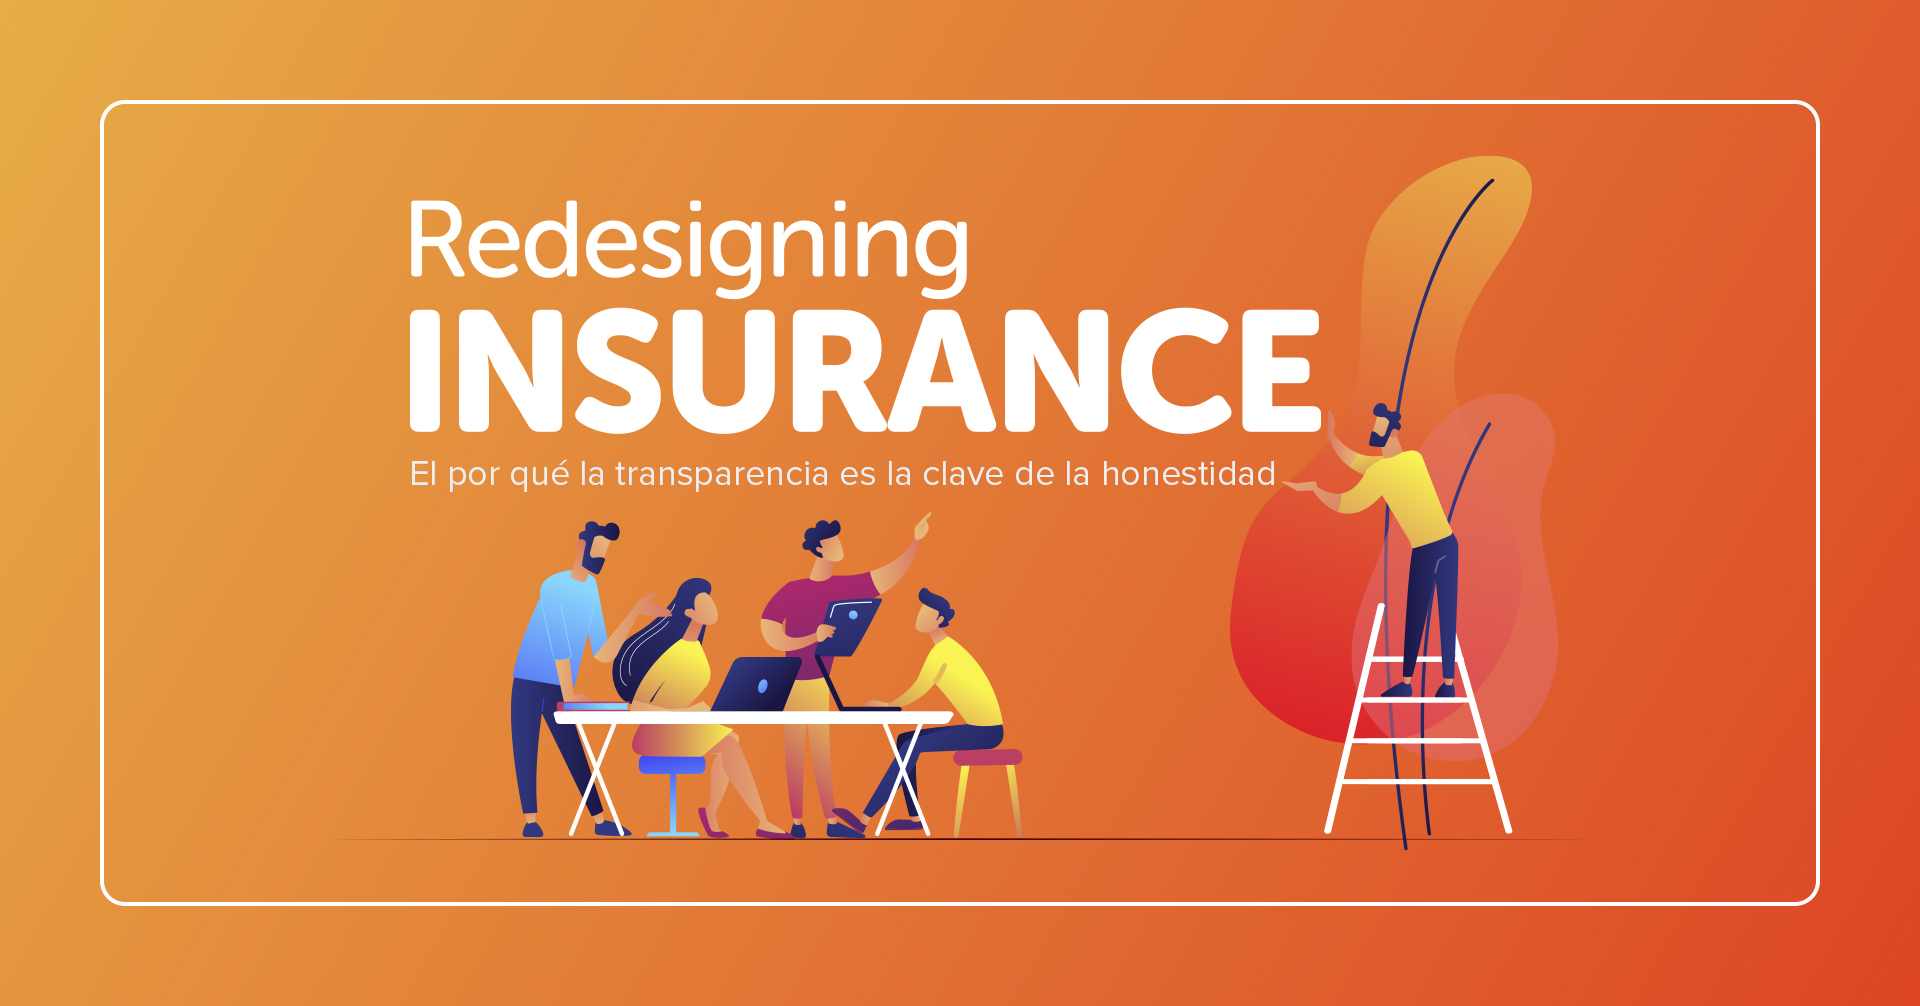 Redesigning-insurance-linkedin-image-ES